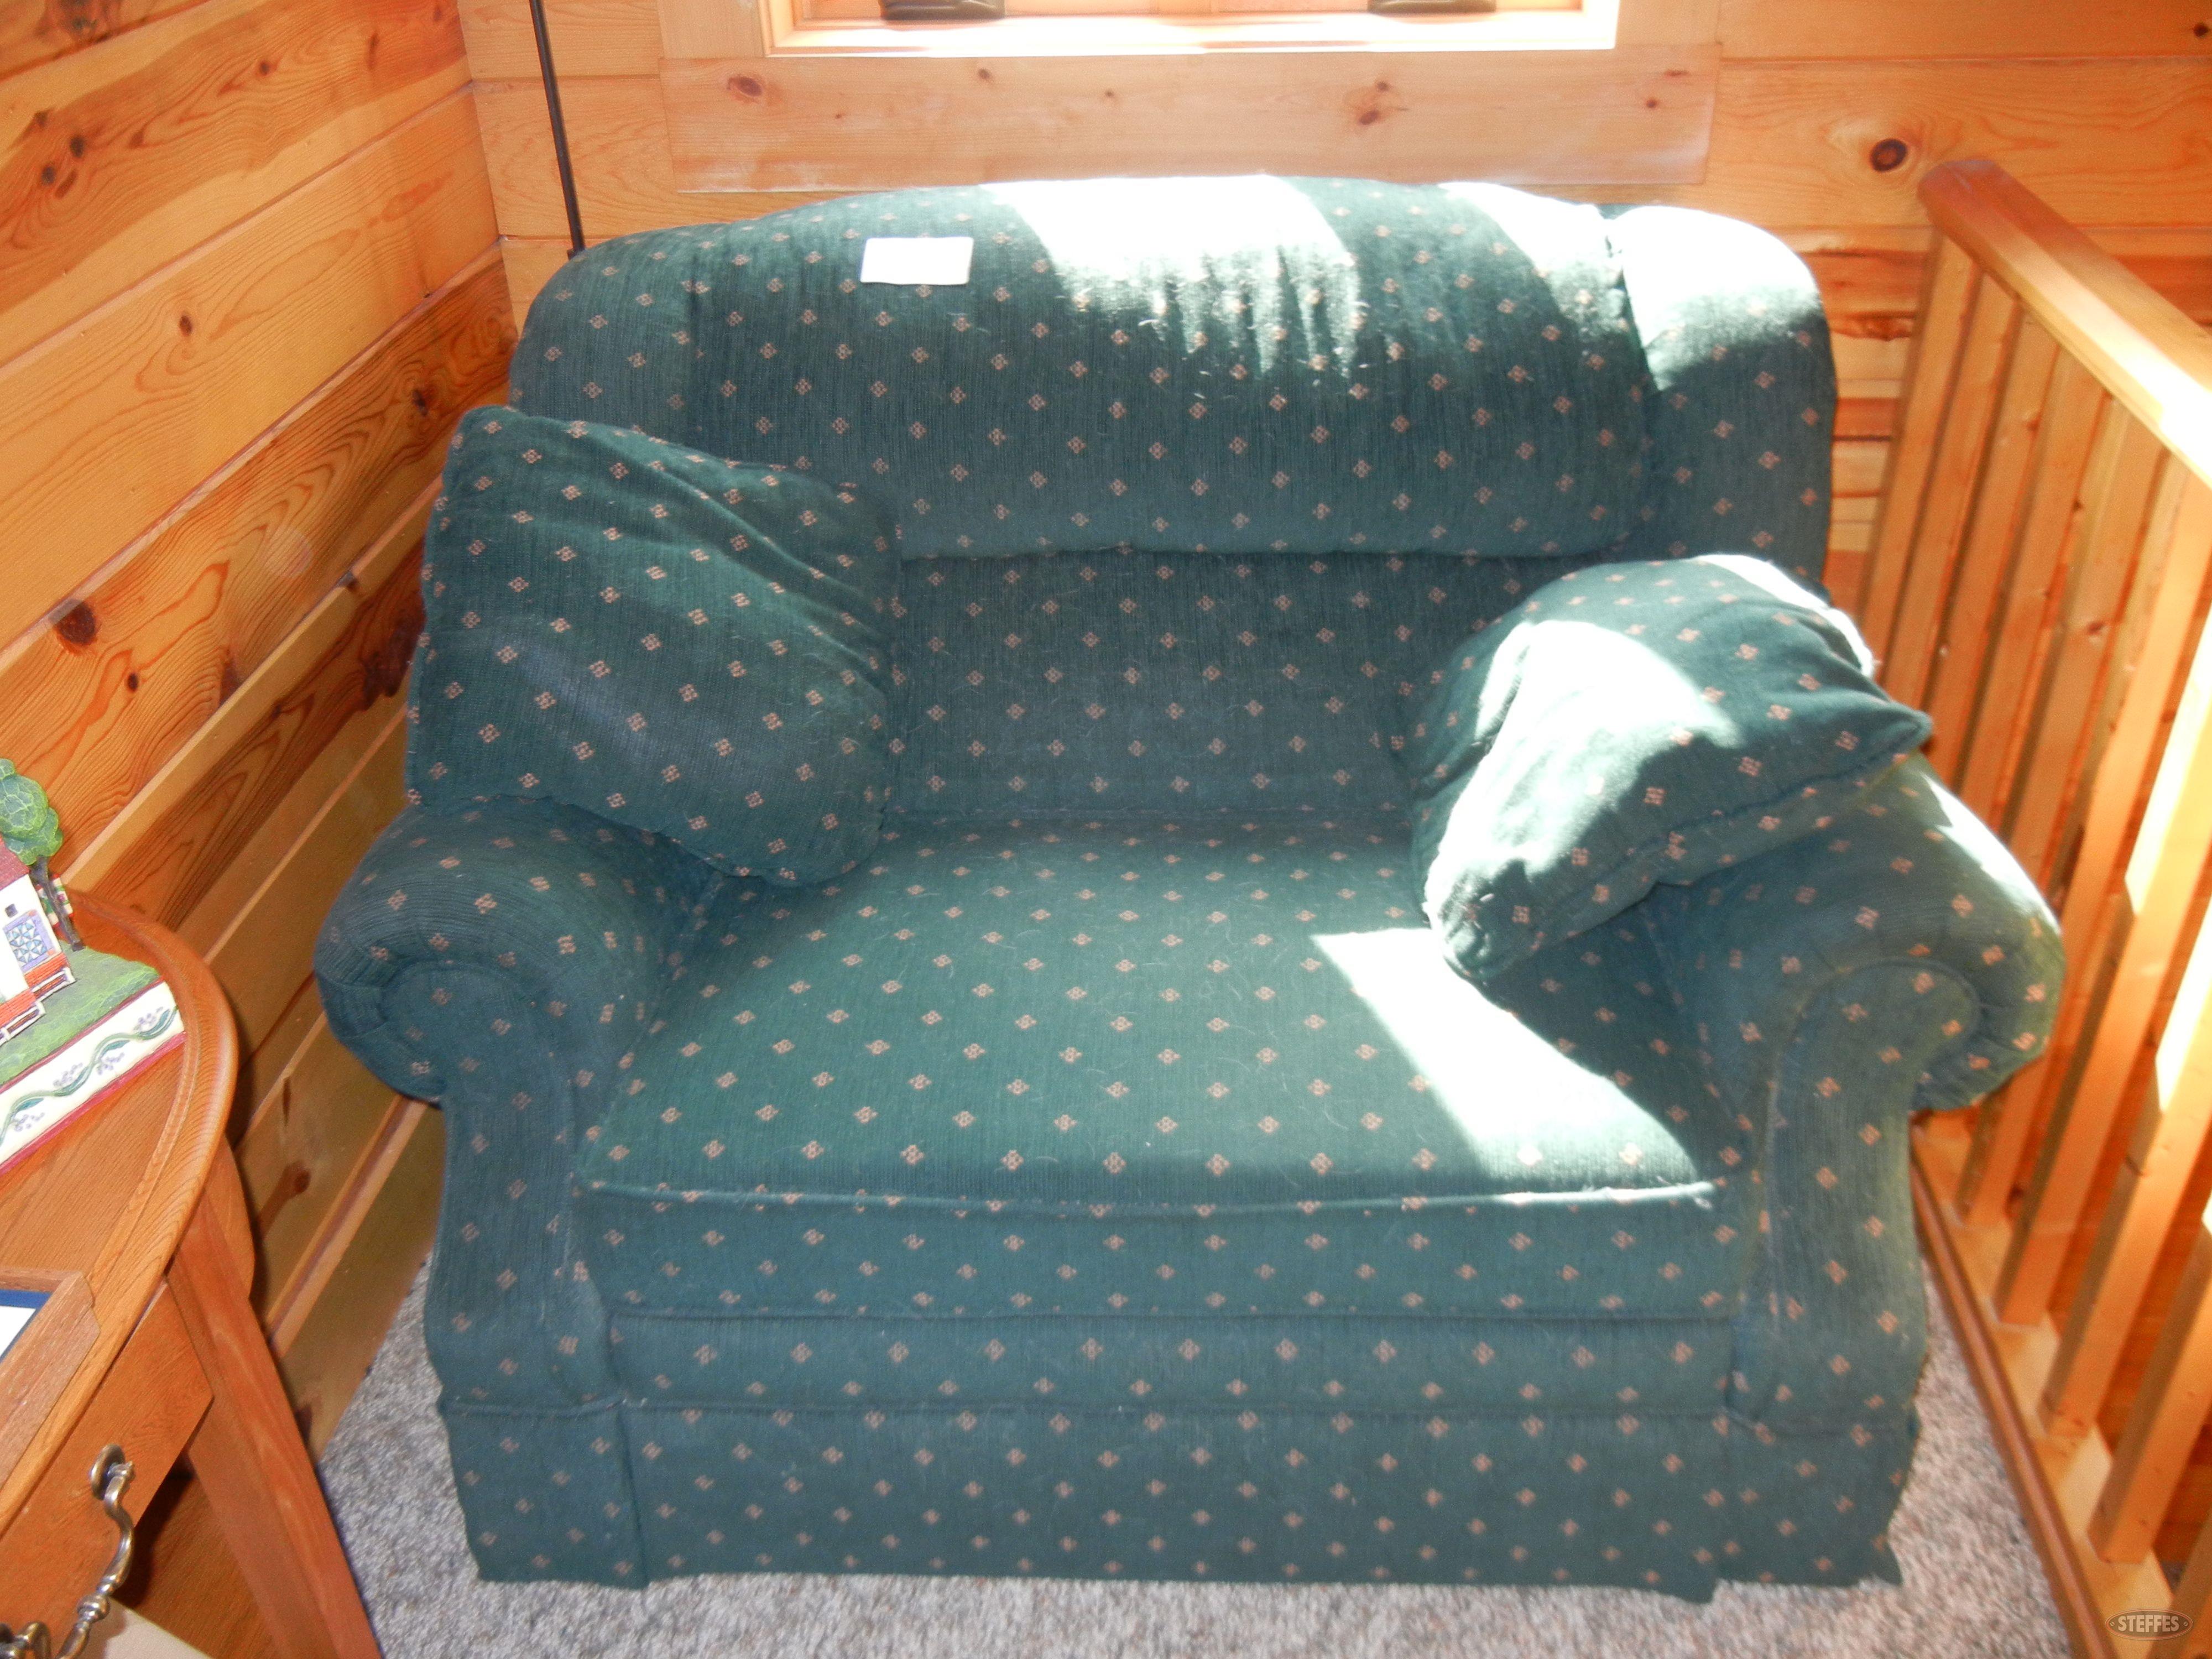 Green oversized recliner chair